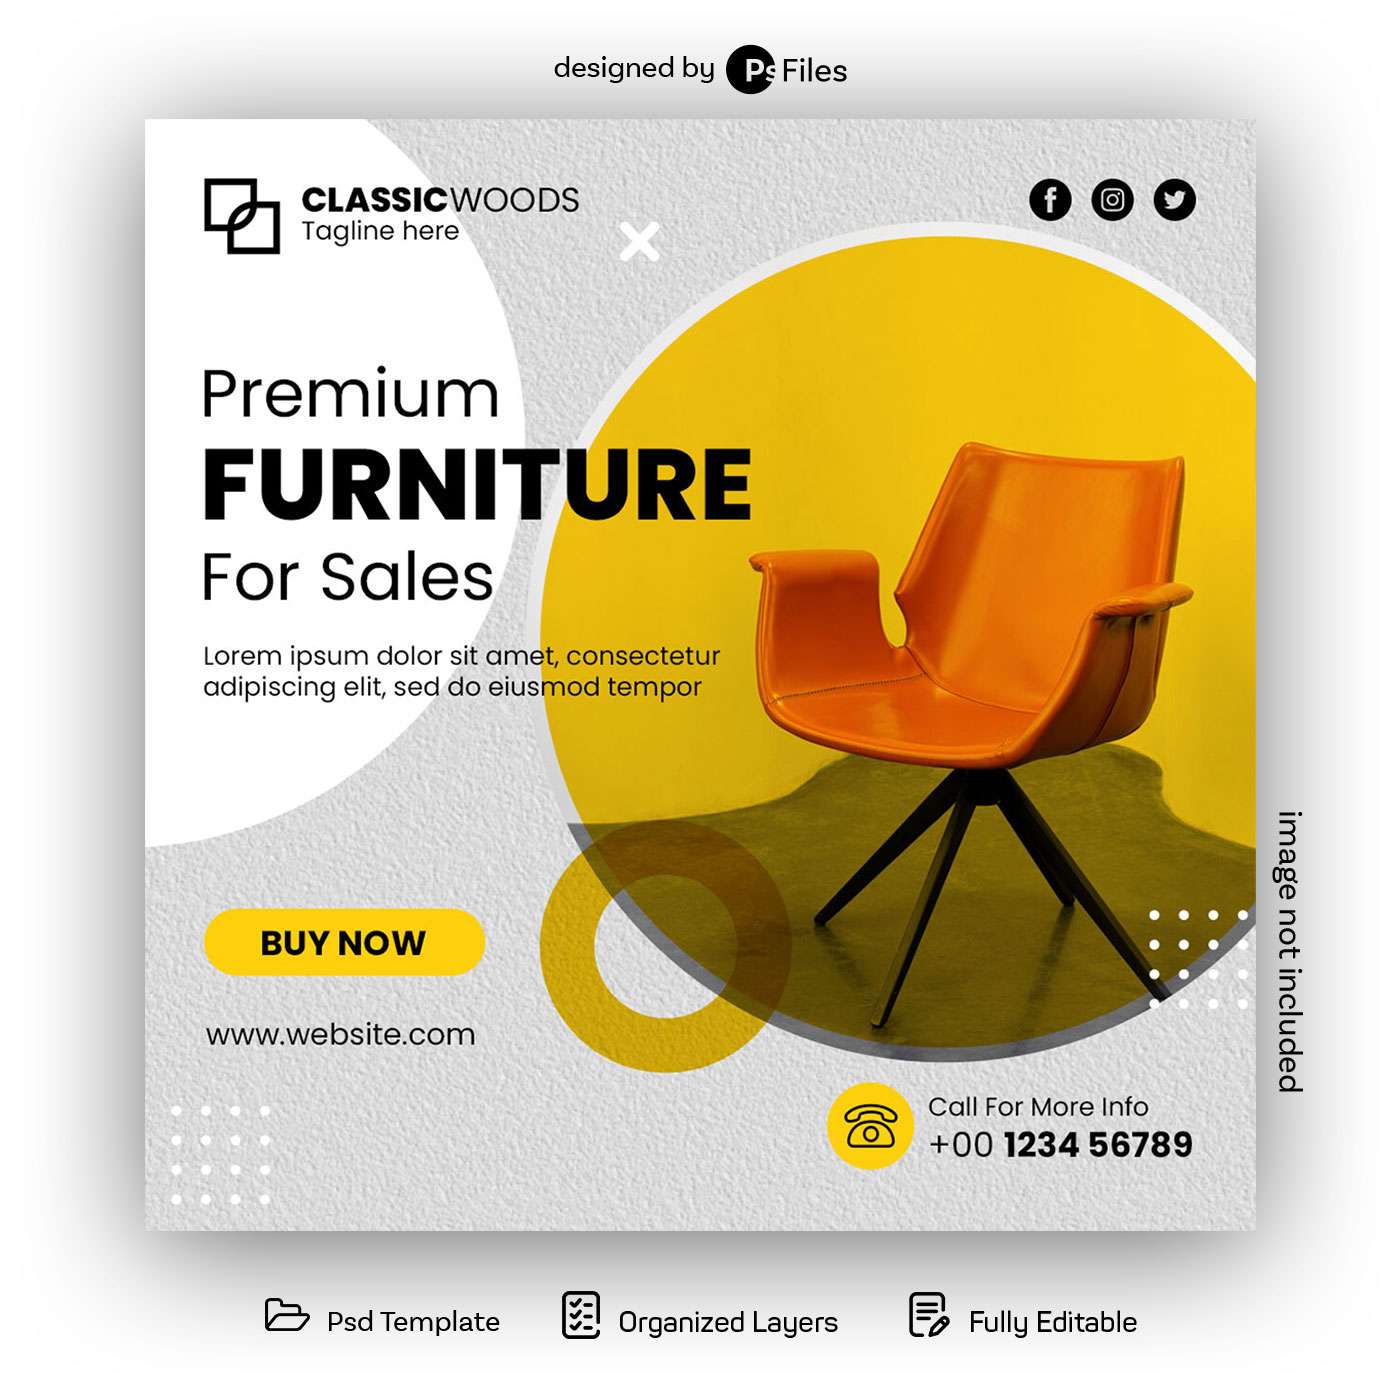 Furniture on Sale Instagram Post Design Template PSD free